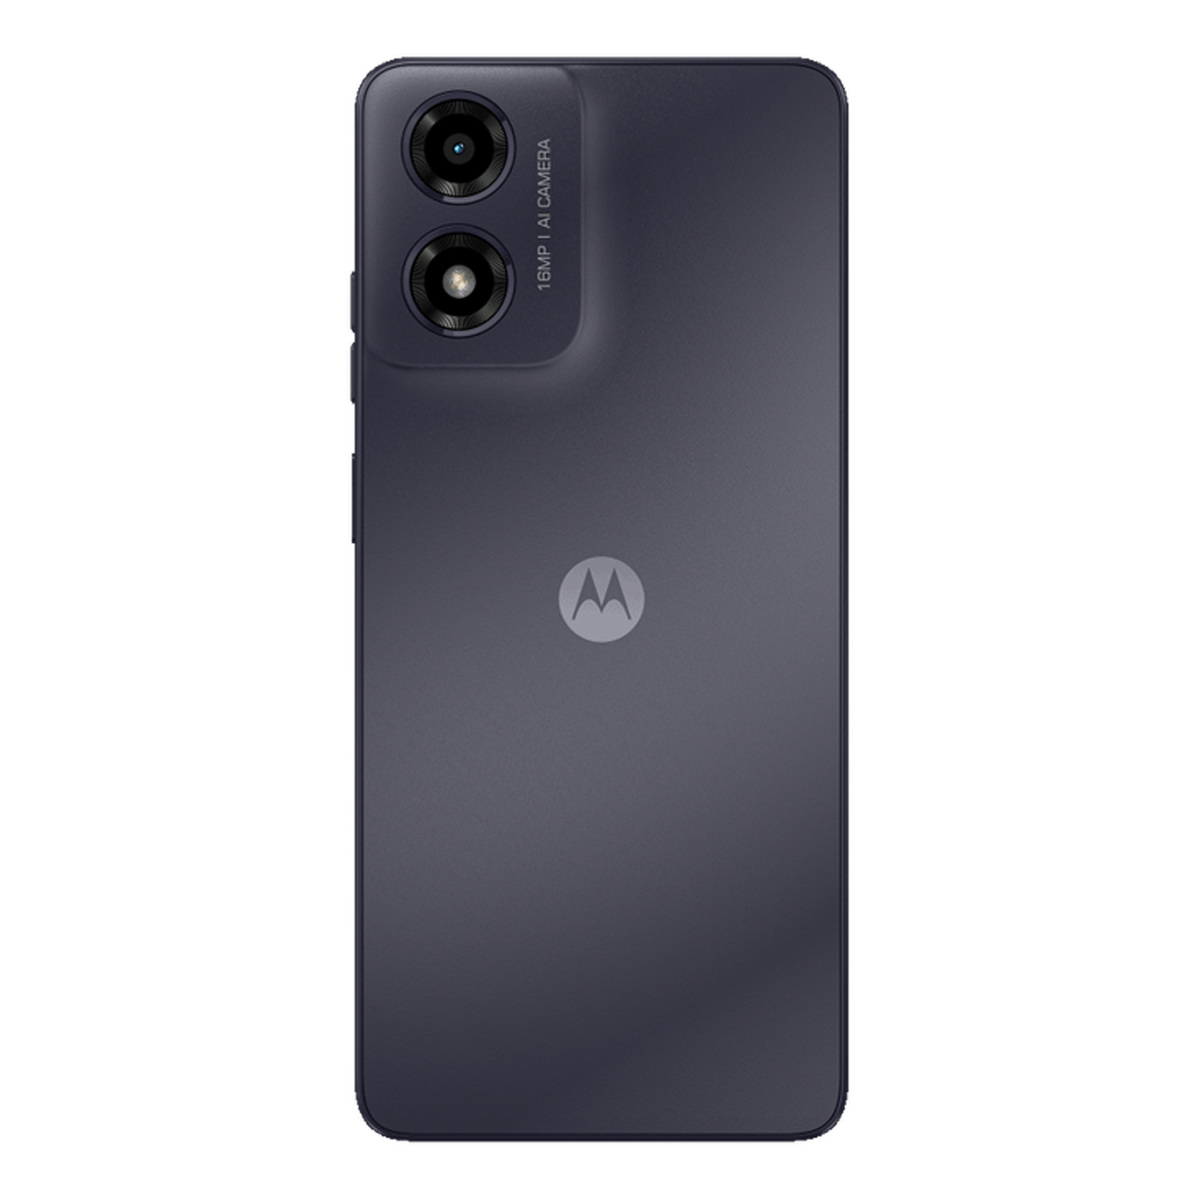 Motorola Moto G04 4G Smartphone, 4 GB RAM, 64 GB Storage, Concord Black 